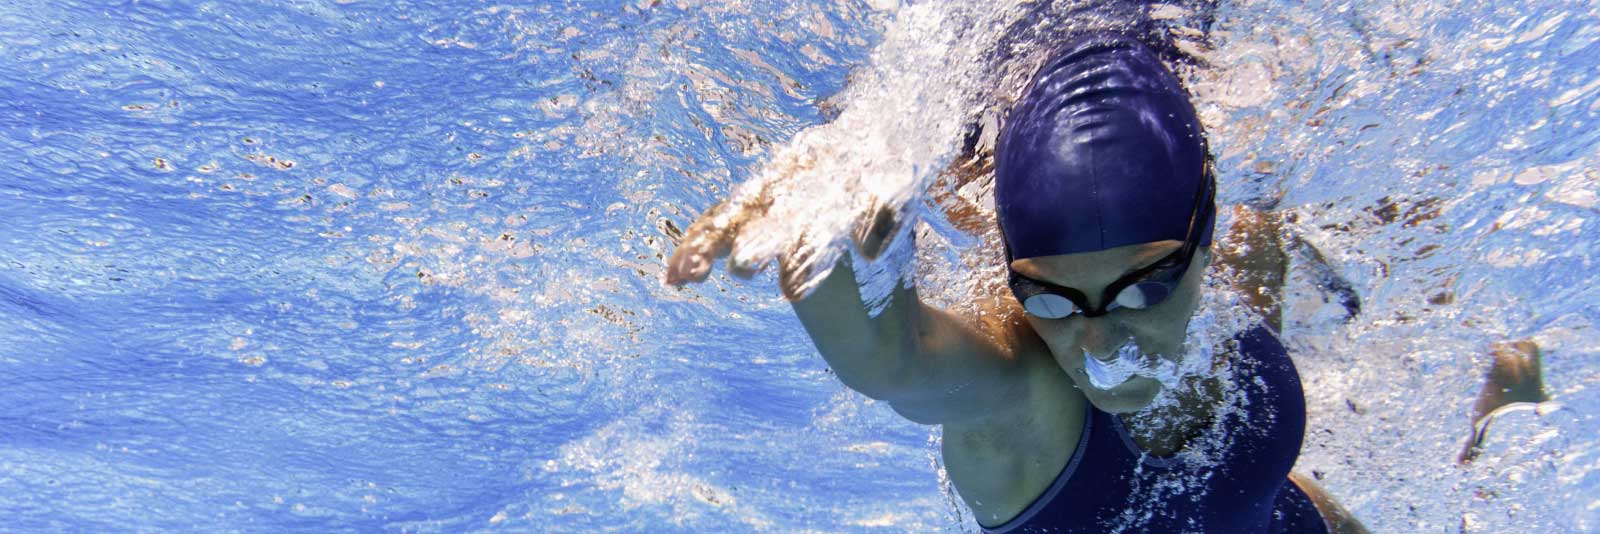 Women's swimmer underwater